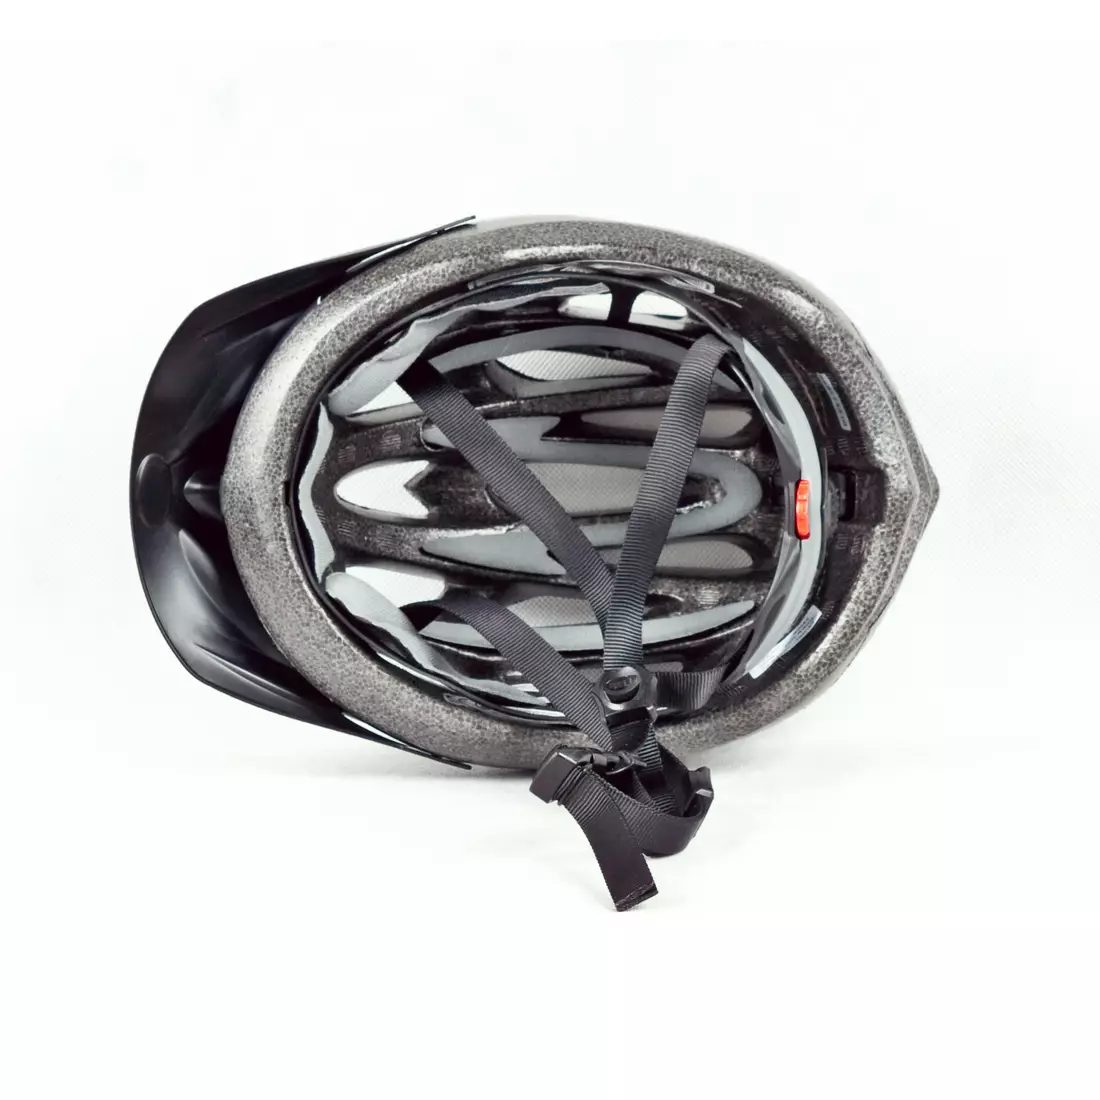 BELL PRESIDIO - bicycle helmet, black and titanium / sprawl